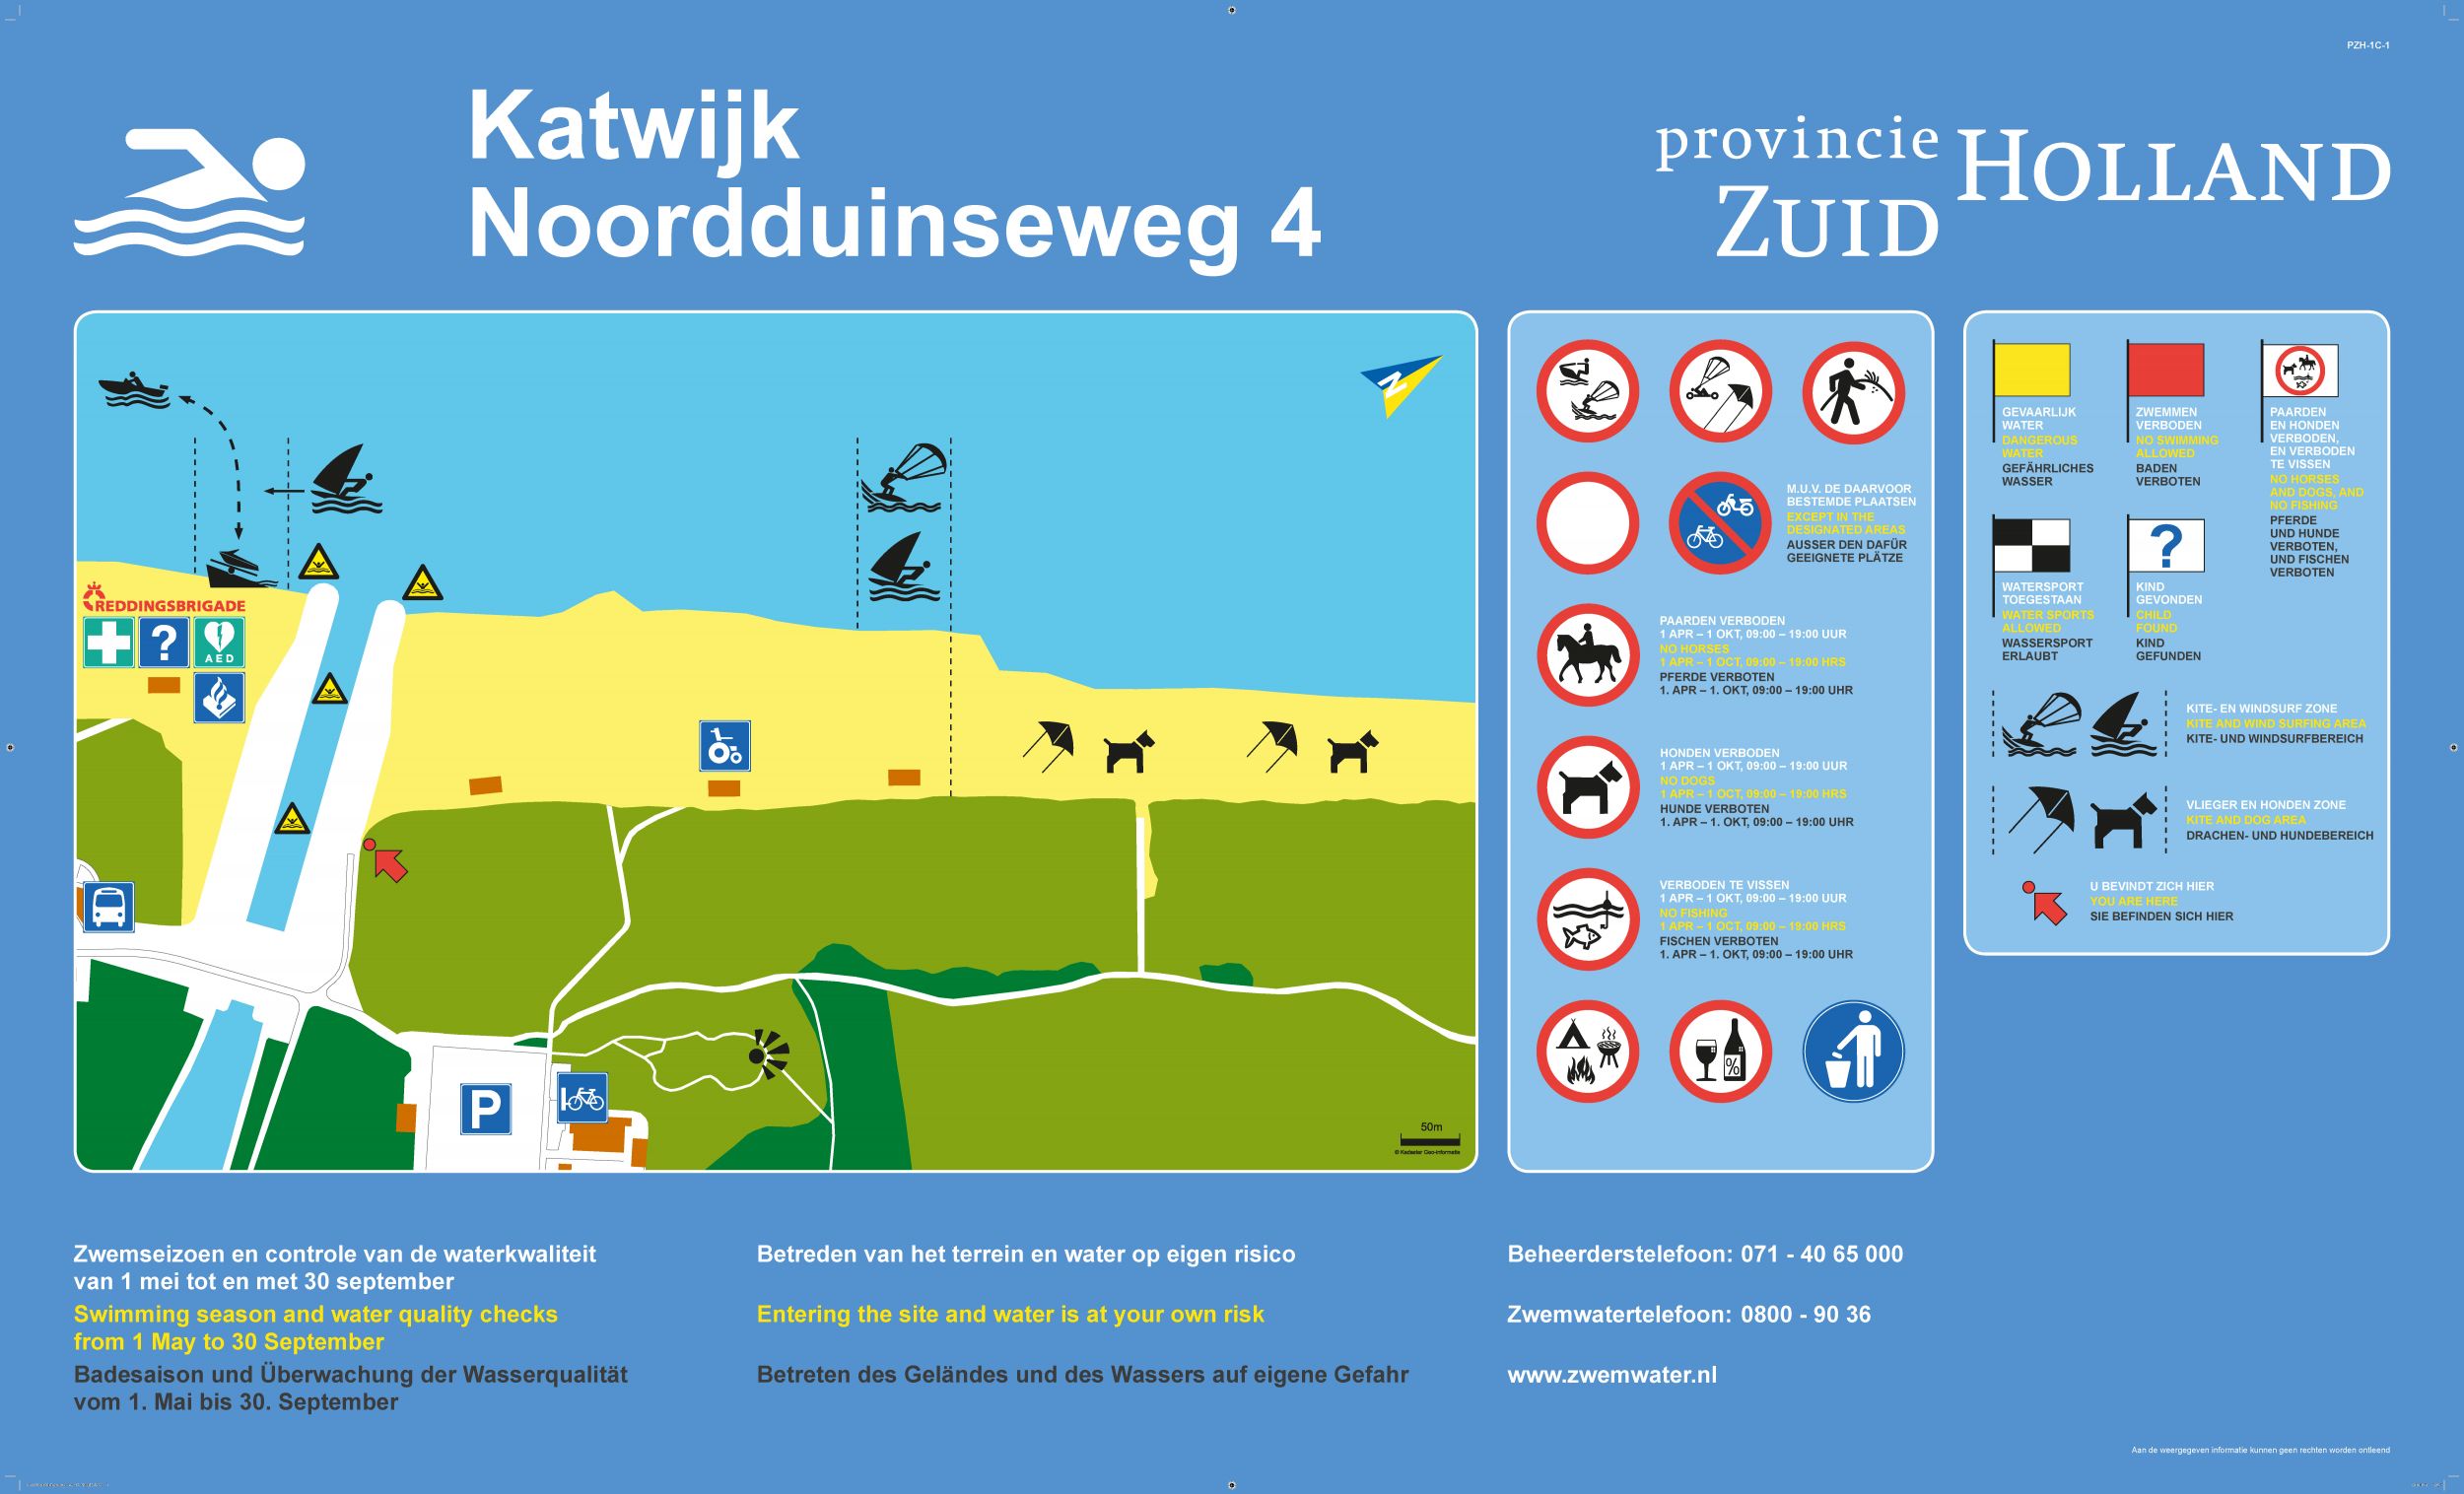 The information board at the swimming location Katwijk aan Zee Boulevard Noord